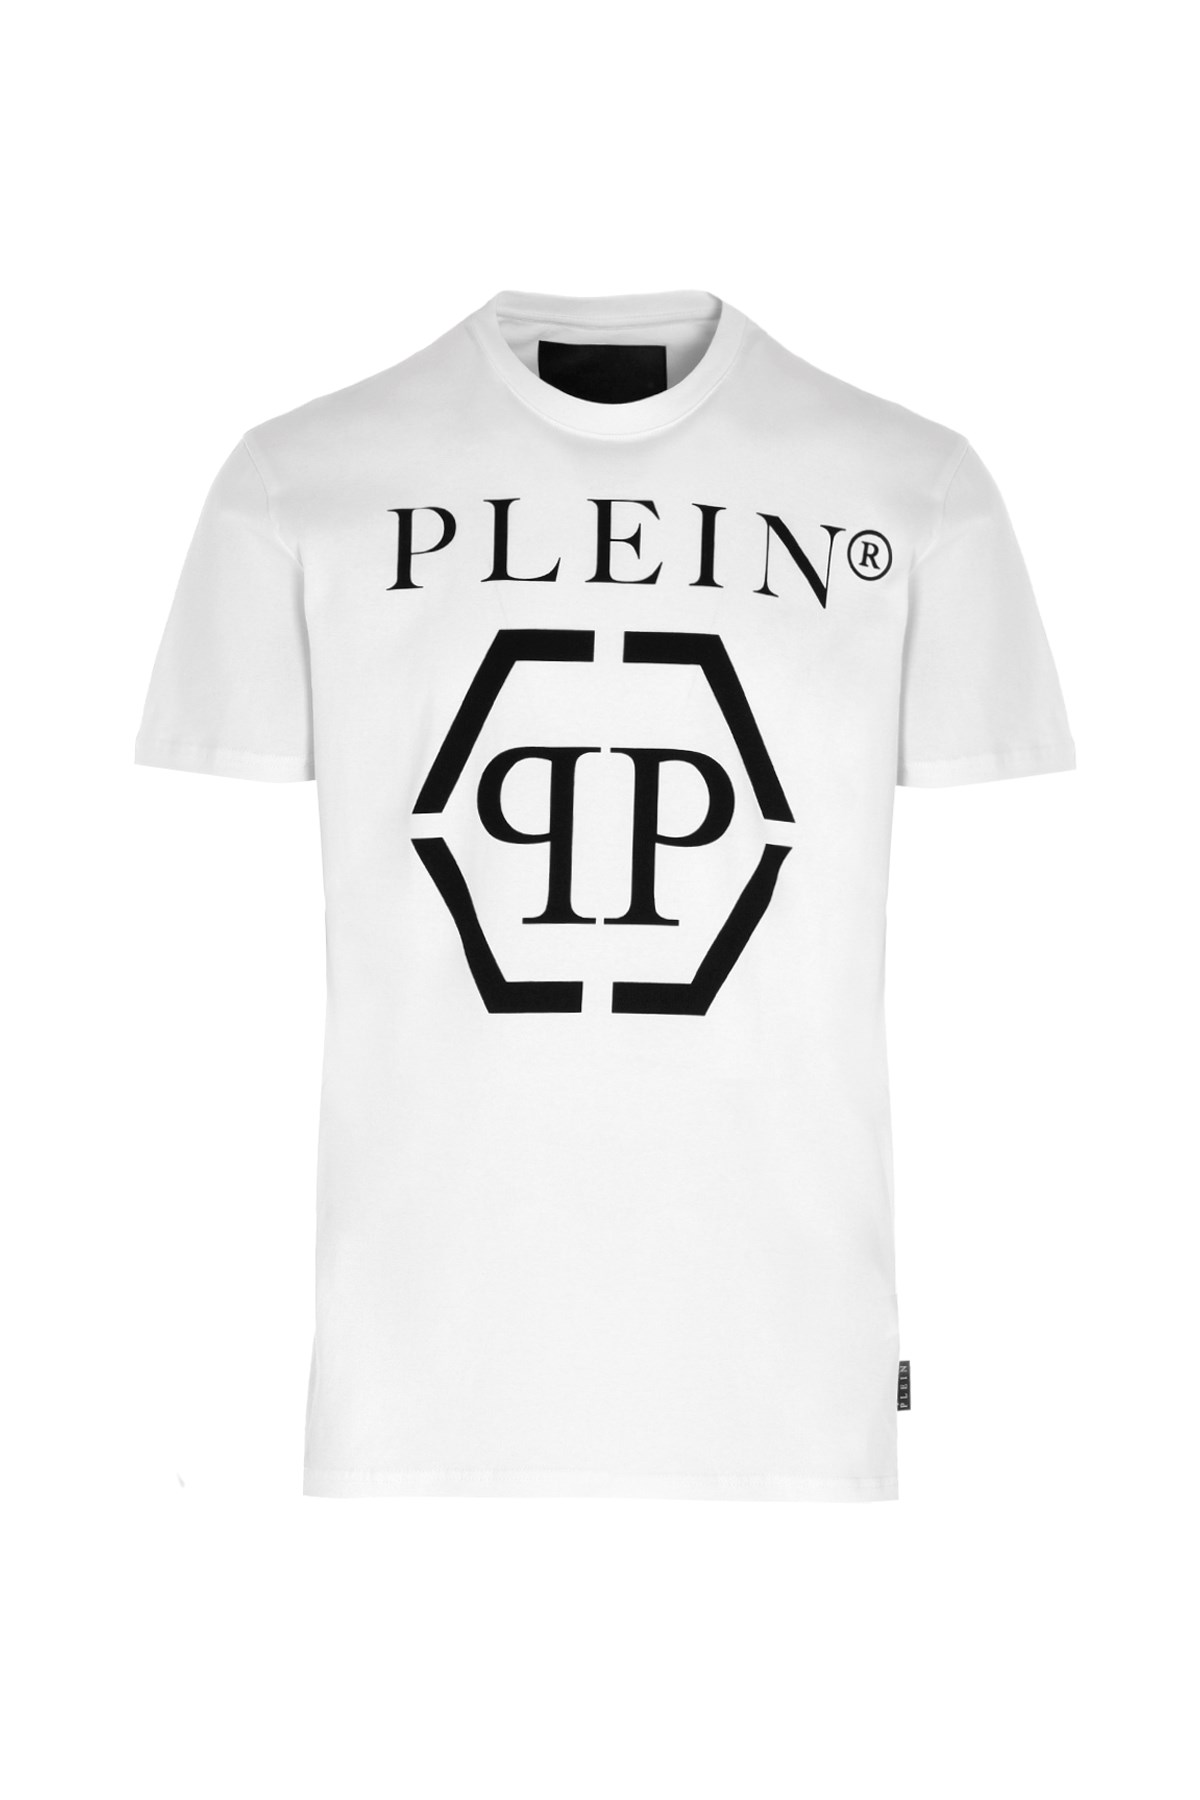 PHILIPP PLEIN Logo Print T-Shirt